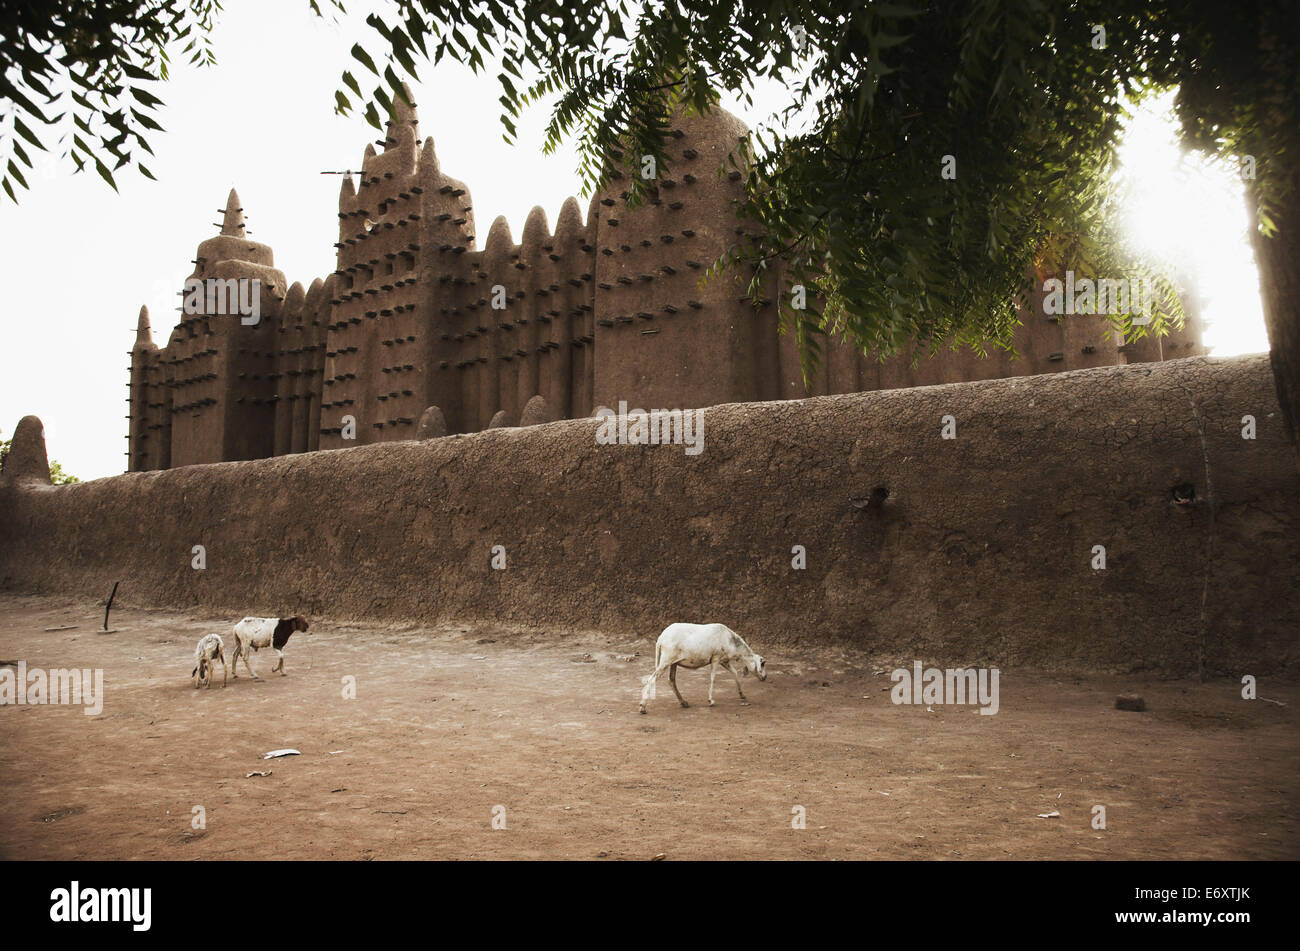 Great Mosque, Djenne, Mopti region, Mali Stock Photo